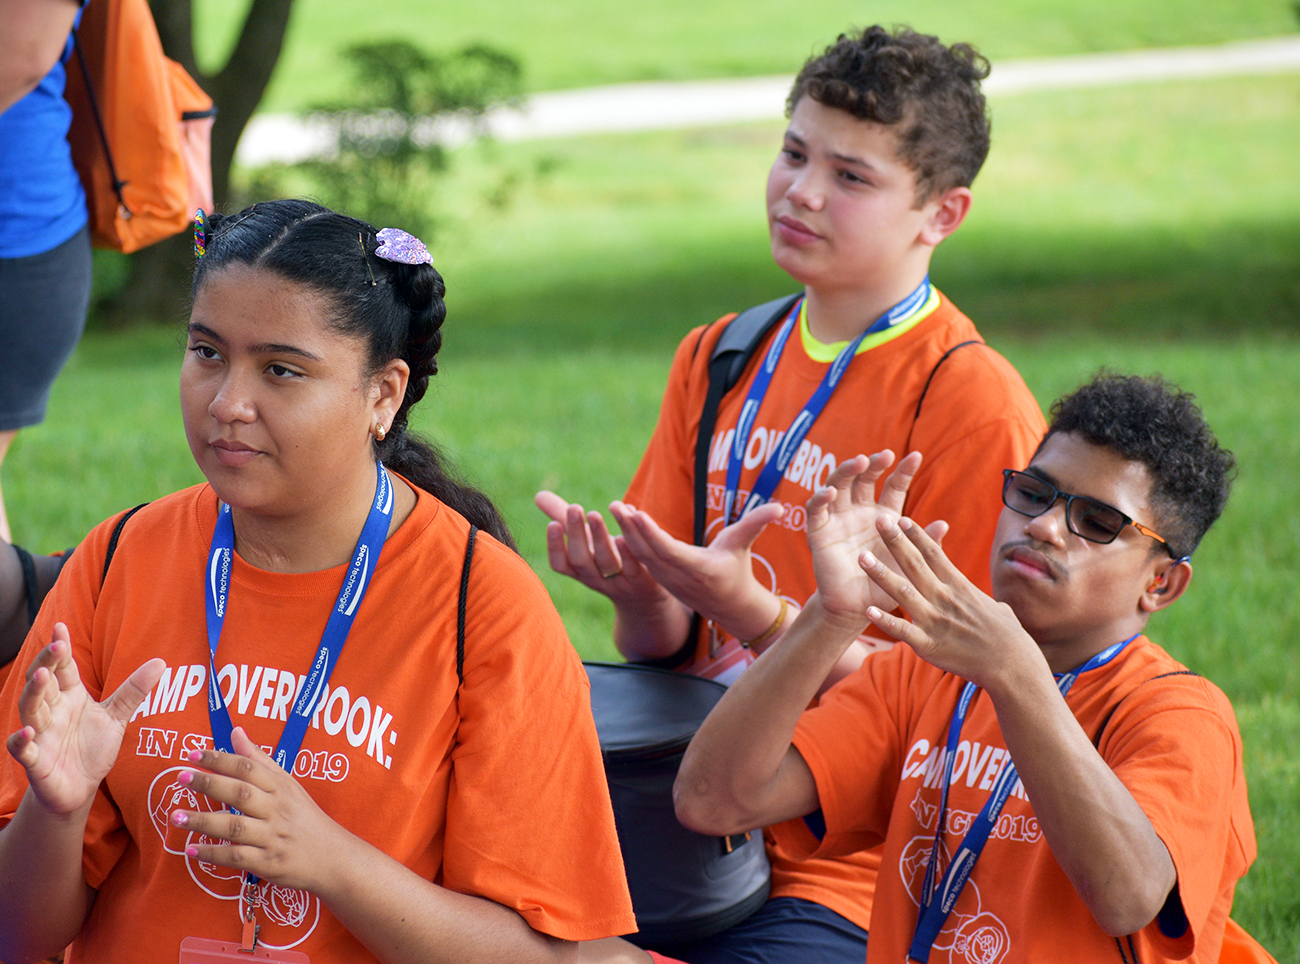 Deaf children enjoy inspirational Camp Overbrook: In Sign – Catholic Philly